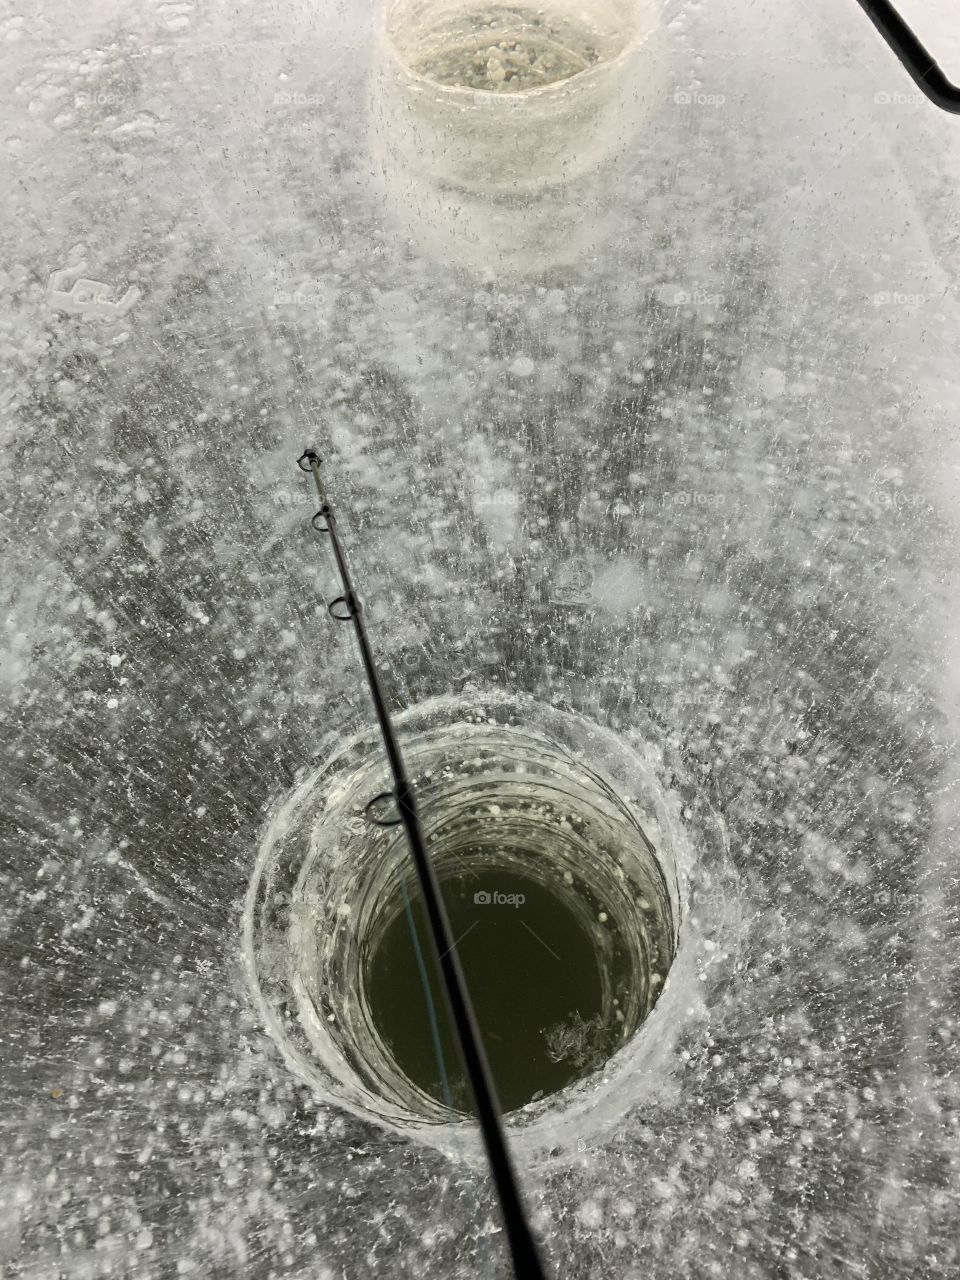 Ice fishing 